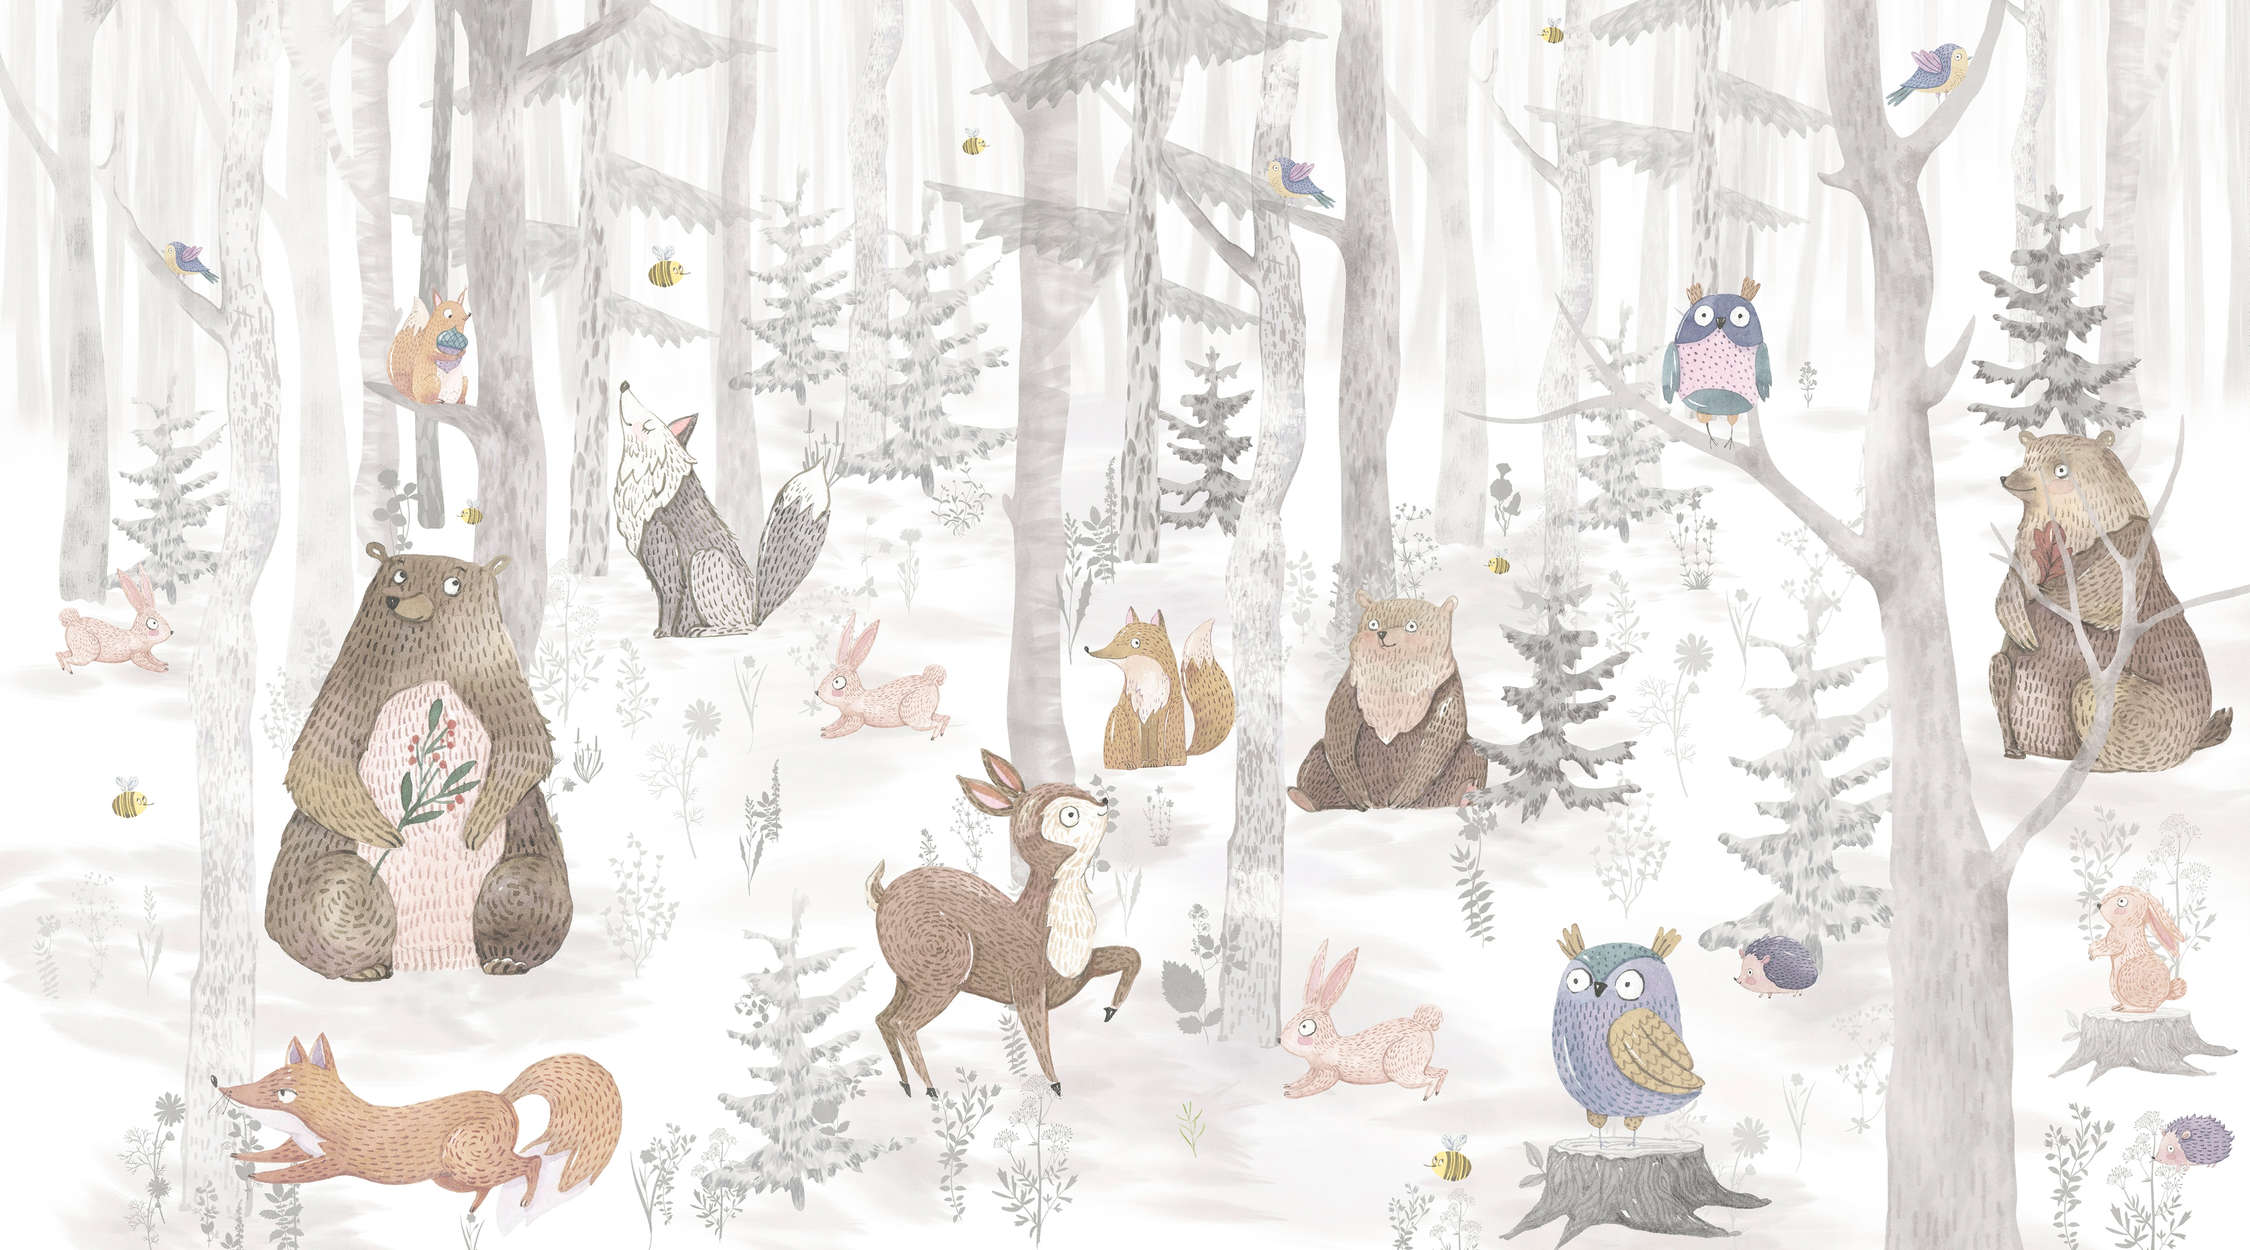             Magic Forest met dieren behang - Glad & parelmoervlies
        